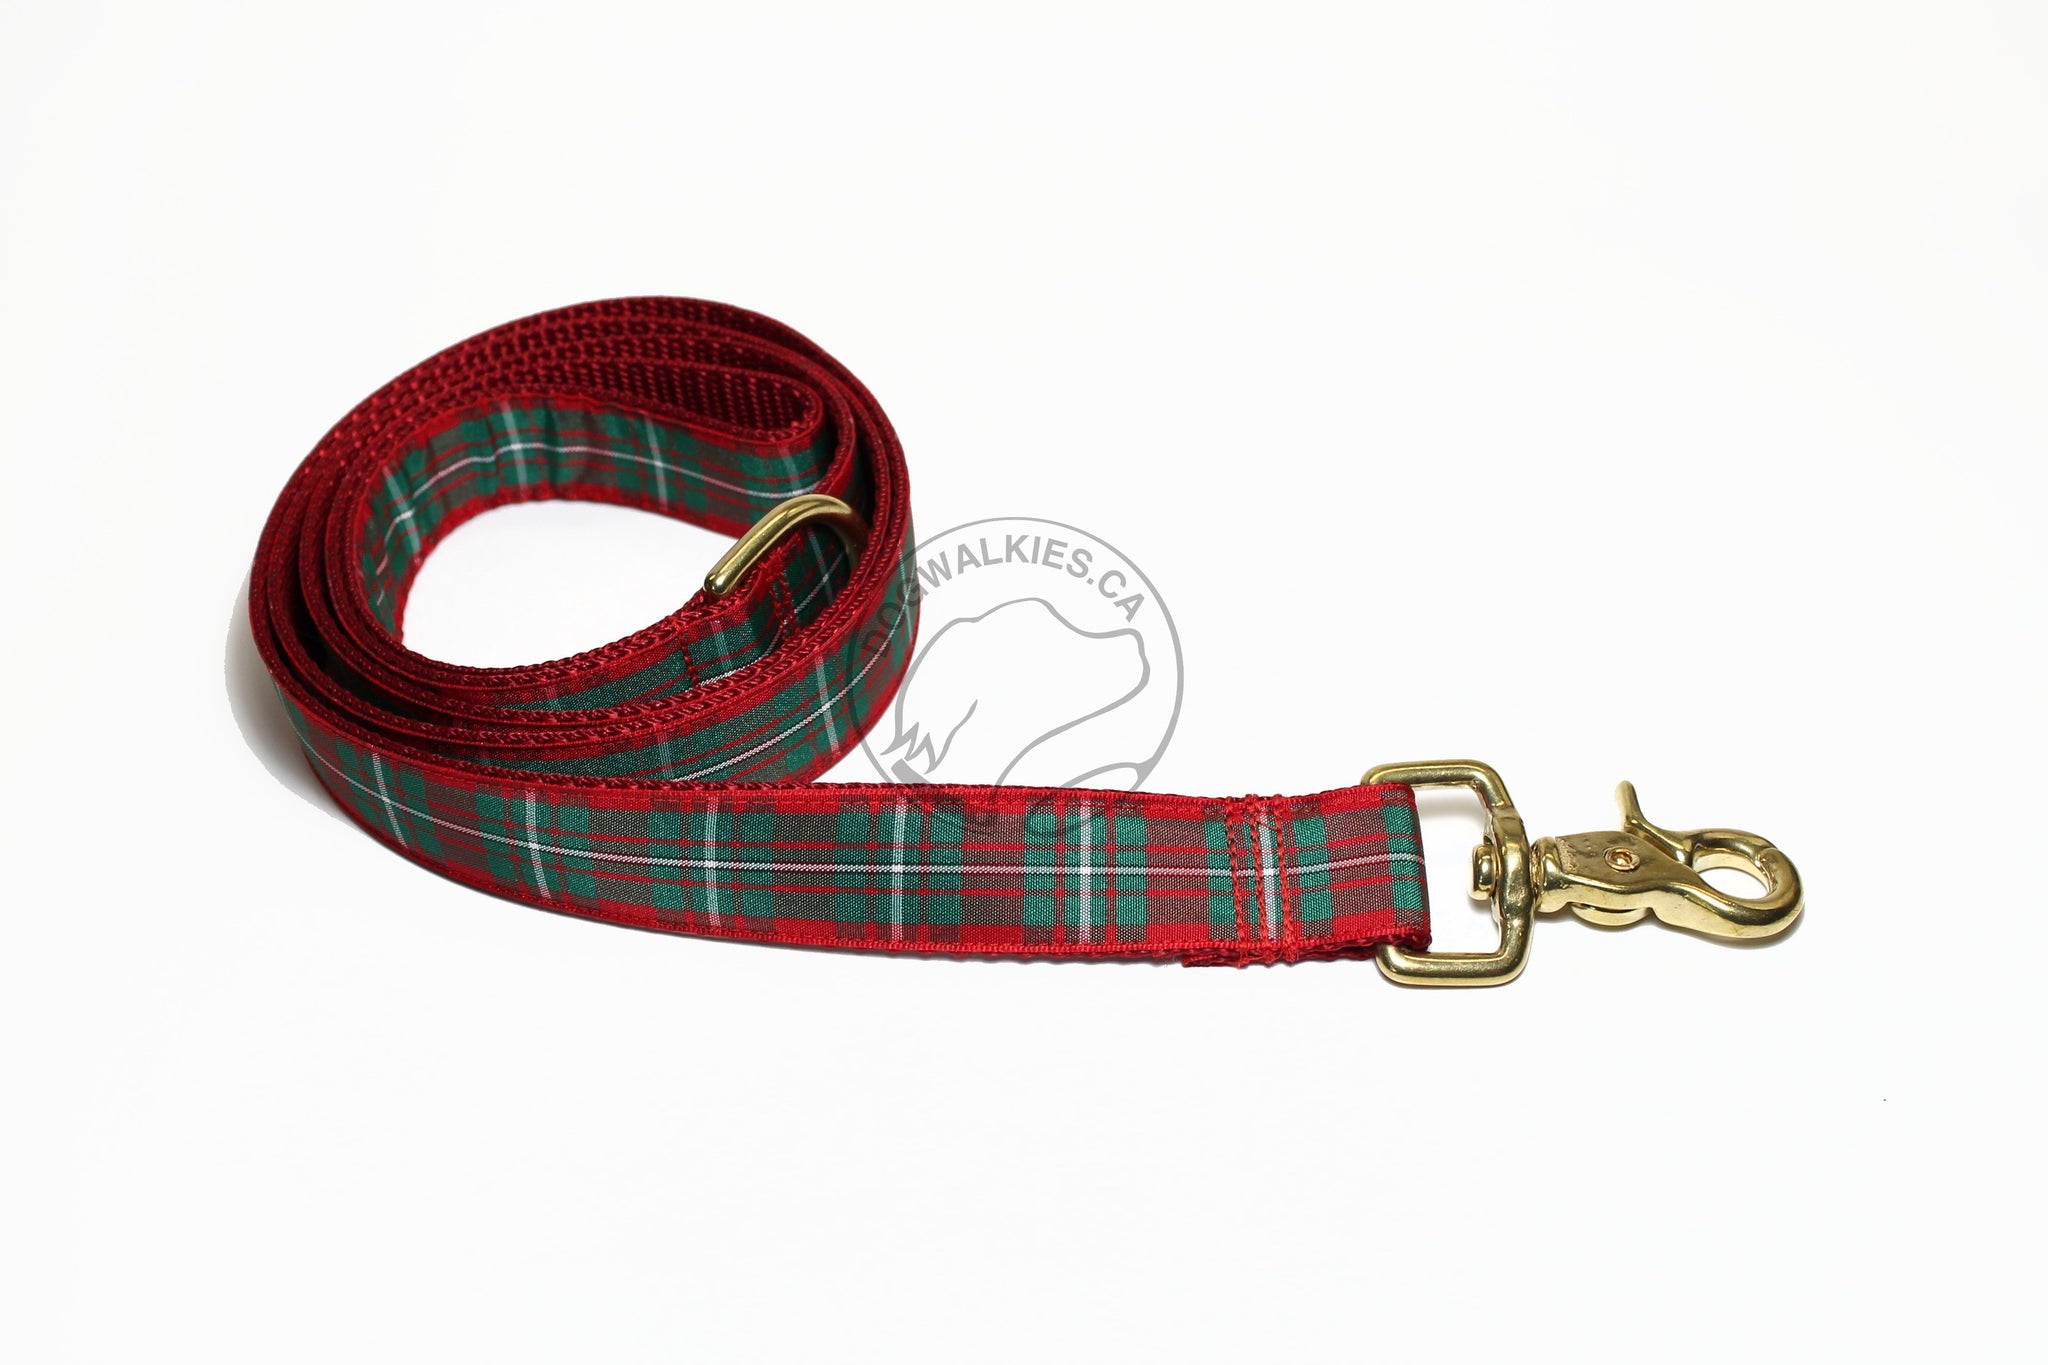 Tartan Dog Leash - MacGregor Clan Tartan